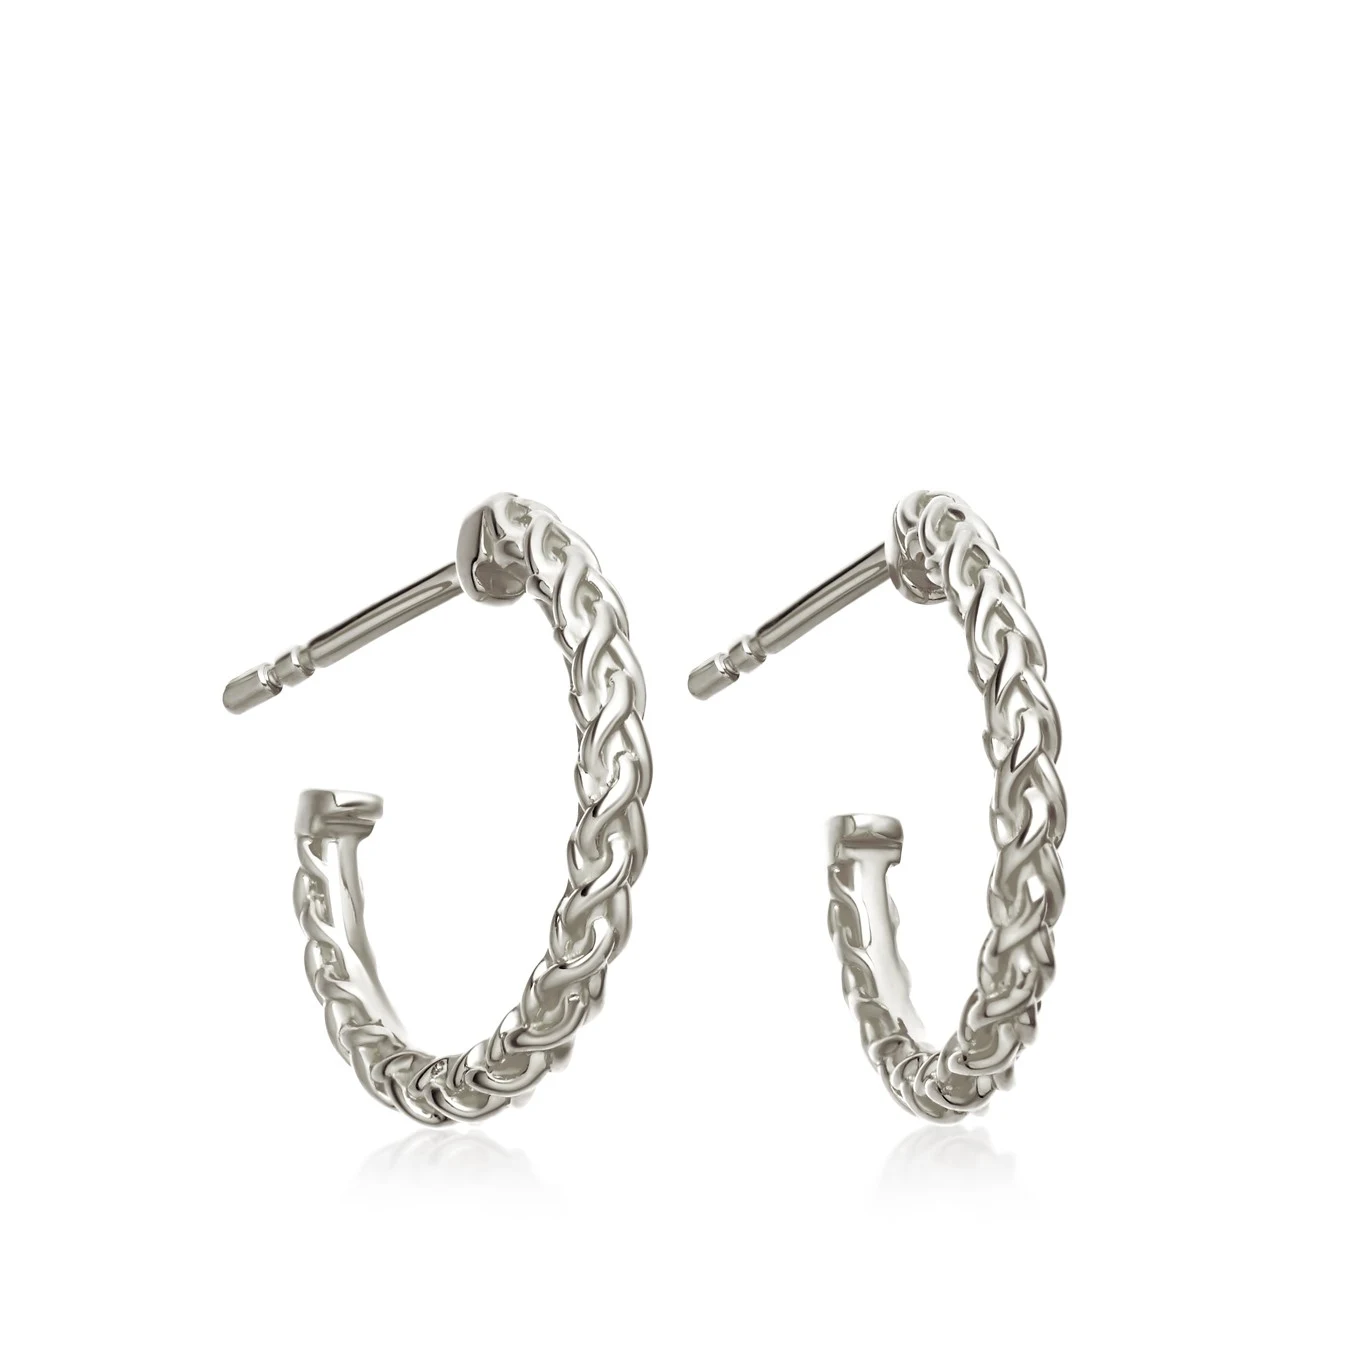 Astley Clarke Mini Spiga Hoop Earrings - British luxury jewellery - UK style blog